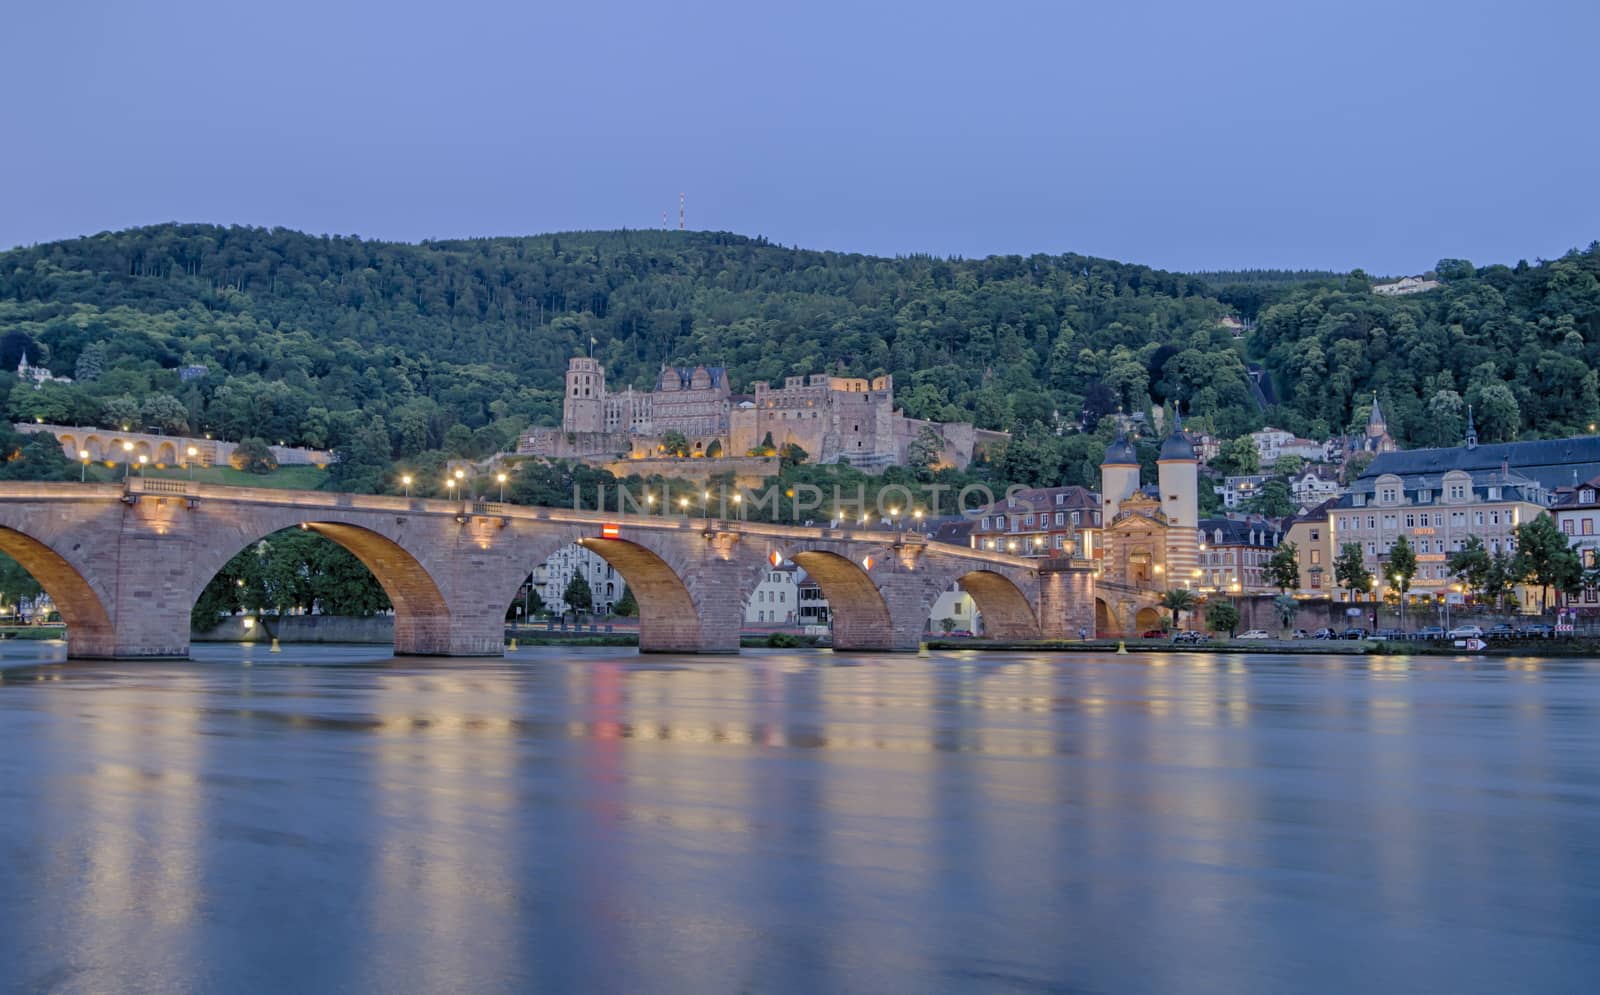 very beautiful Heidelberg city in Germany by mariephotos